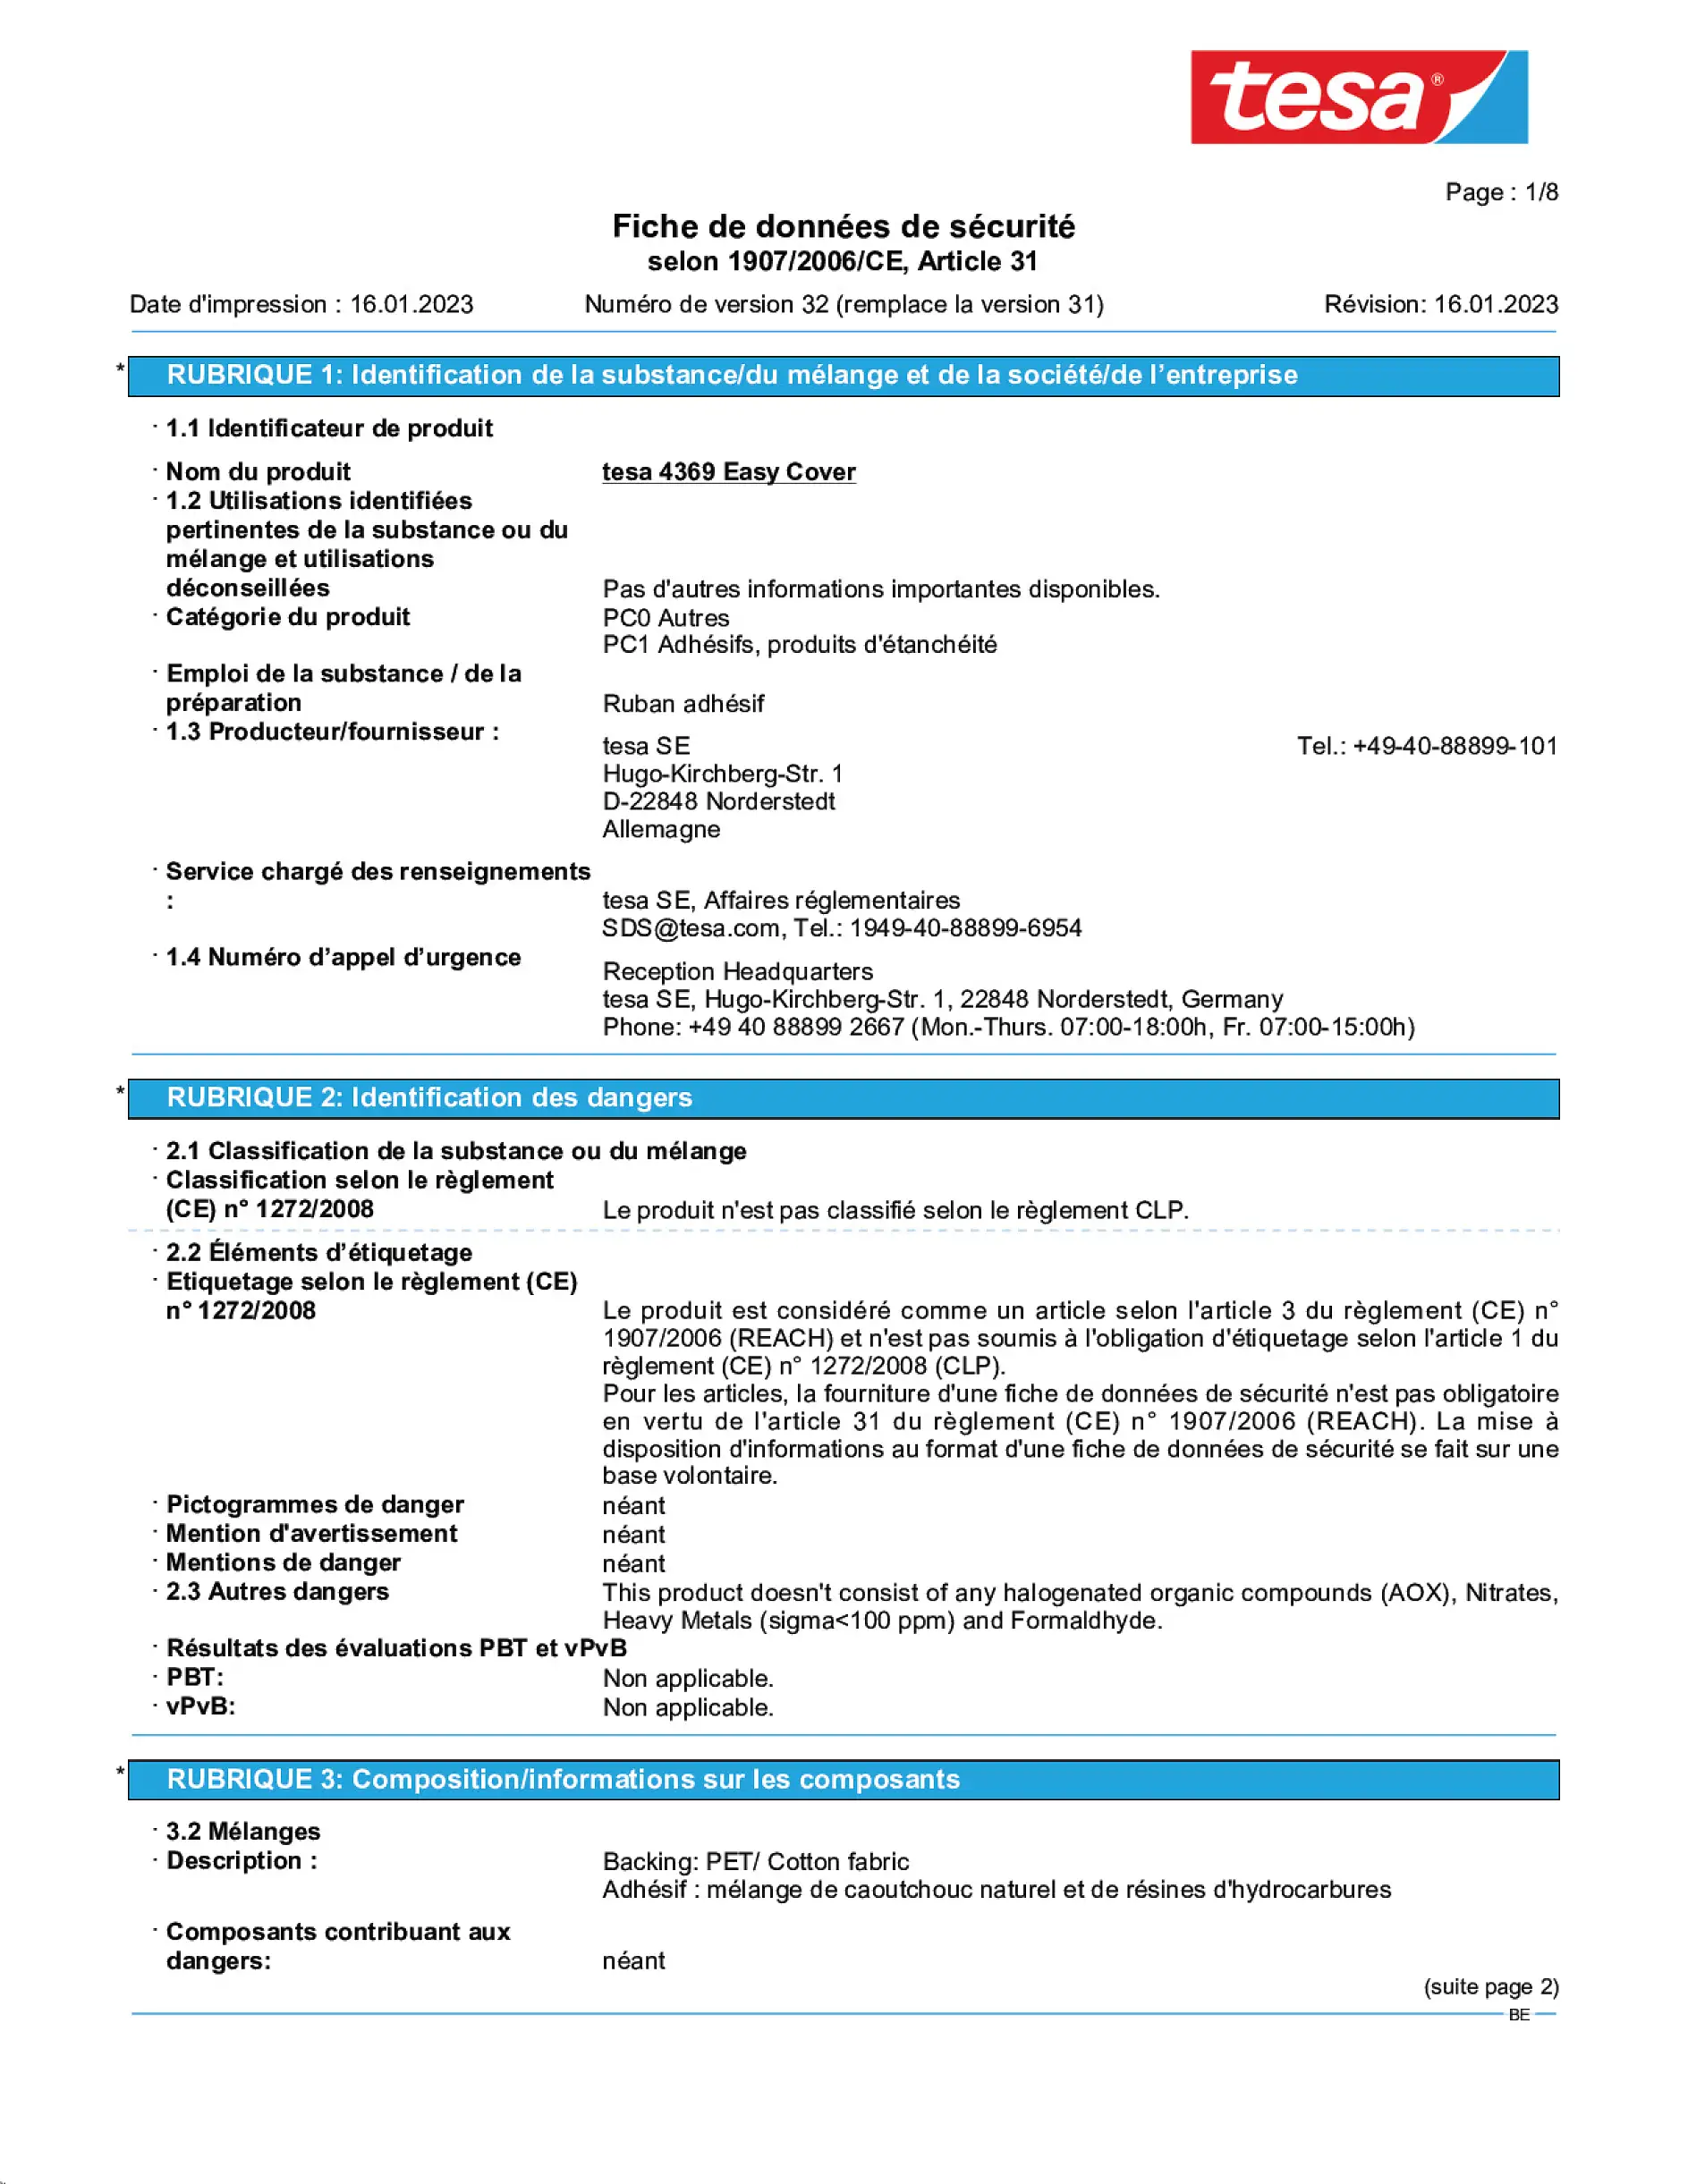 Safety data sheet_tesa® Professional 04369_nl-BE_v32